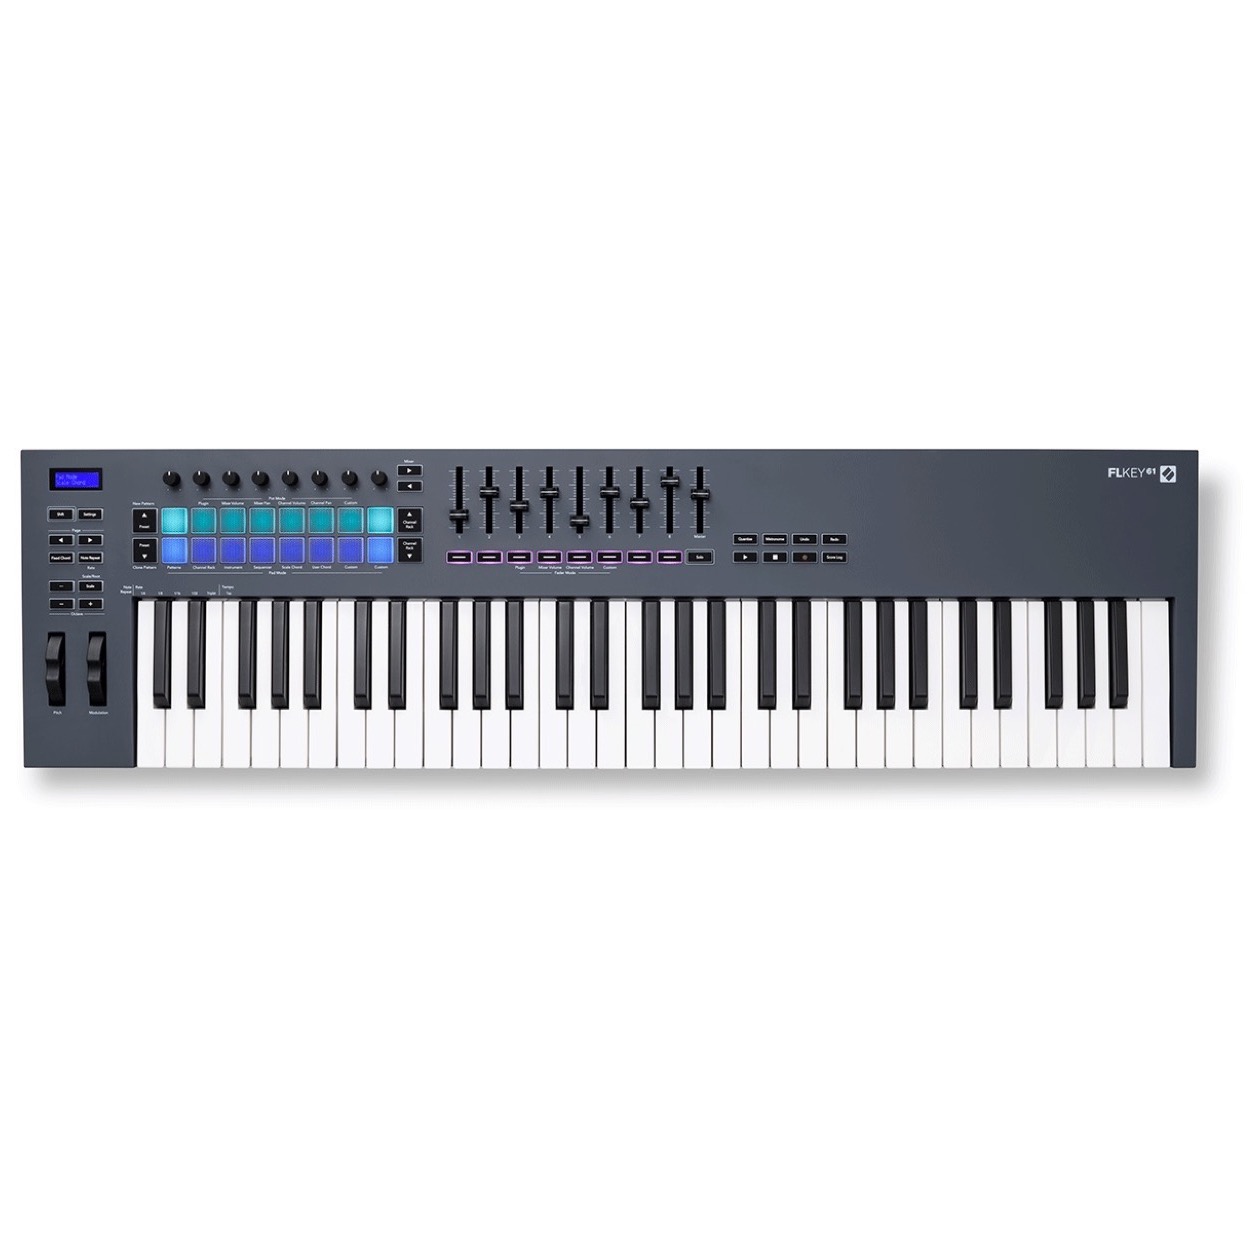 Novation FLkey 61 MIDI keyboard full-size keyboard controller for making music in FL Studio